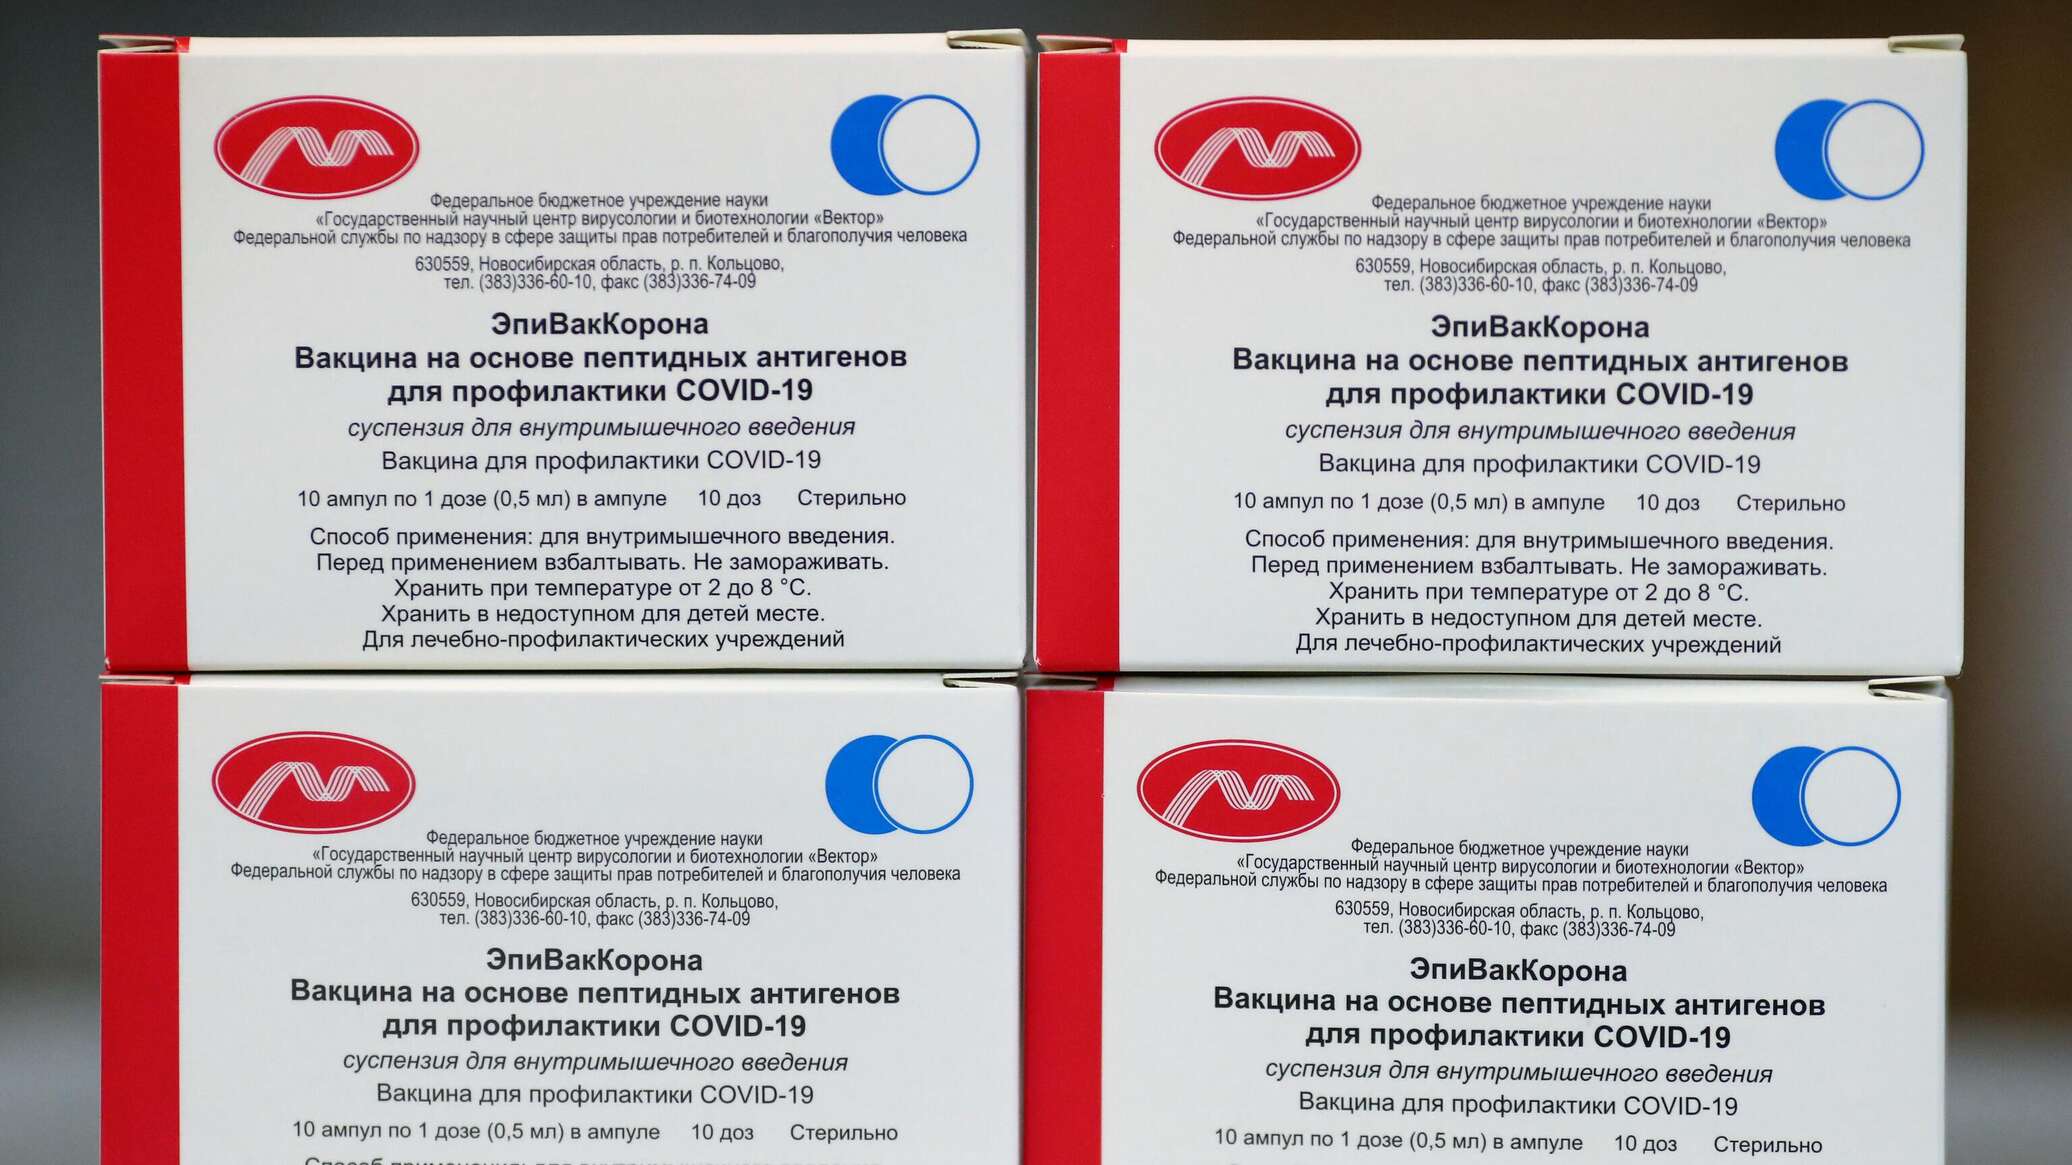 Первая вакцина от коронавируса. Эпиваккорона вакцина. Вакцина на основе пептидных антигенов («эпиваккорона»). Вакцинация от коронавируса вакцины. Производители вакцины от коронавируса в России.